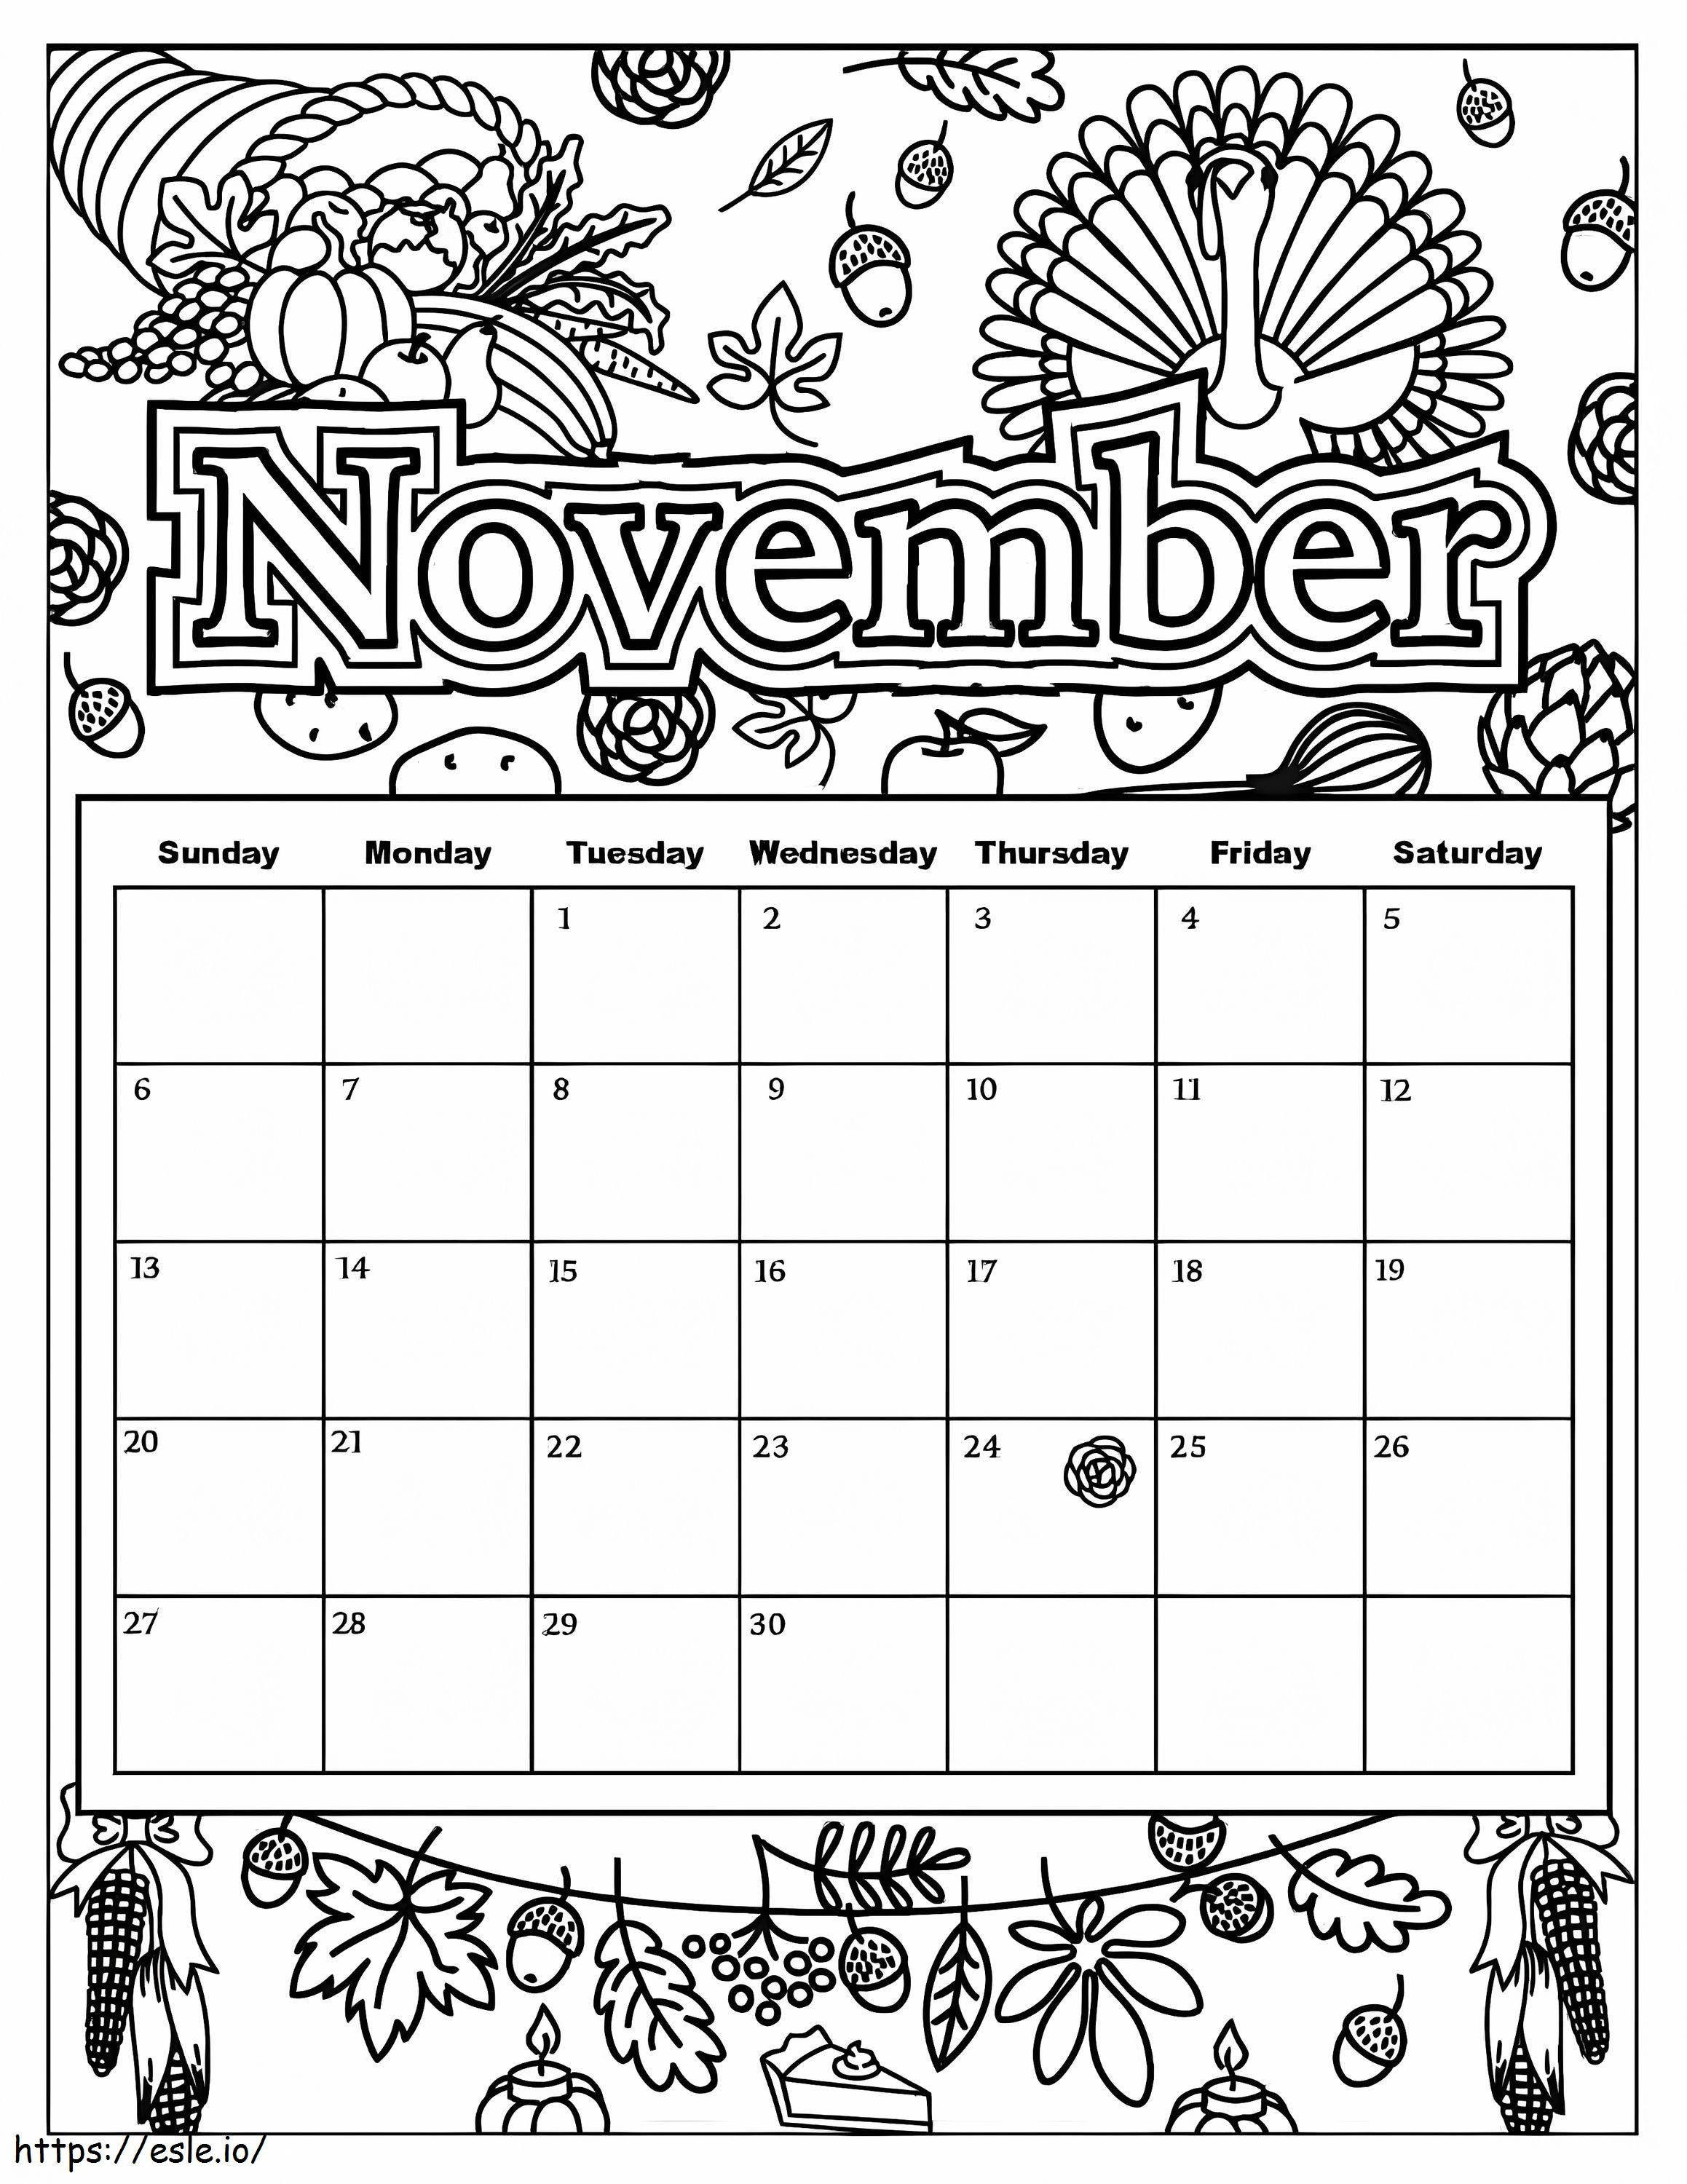 Coloriage Calendrier Pour Novembre Mignon à imprimer dessin